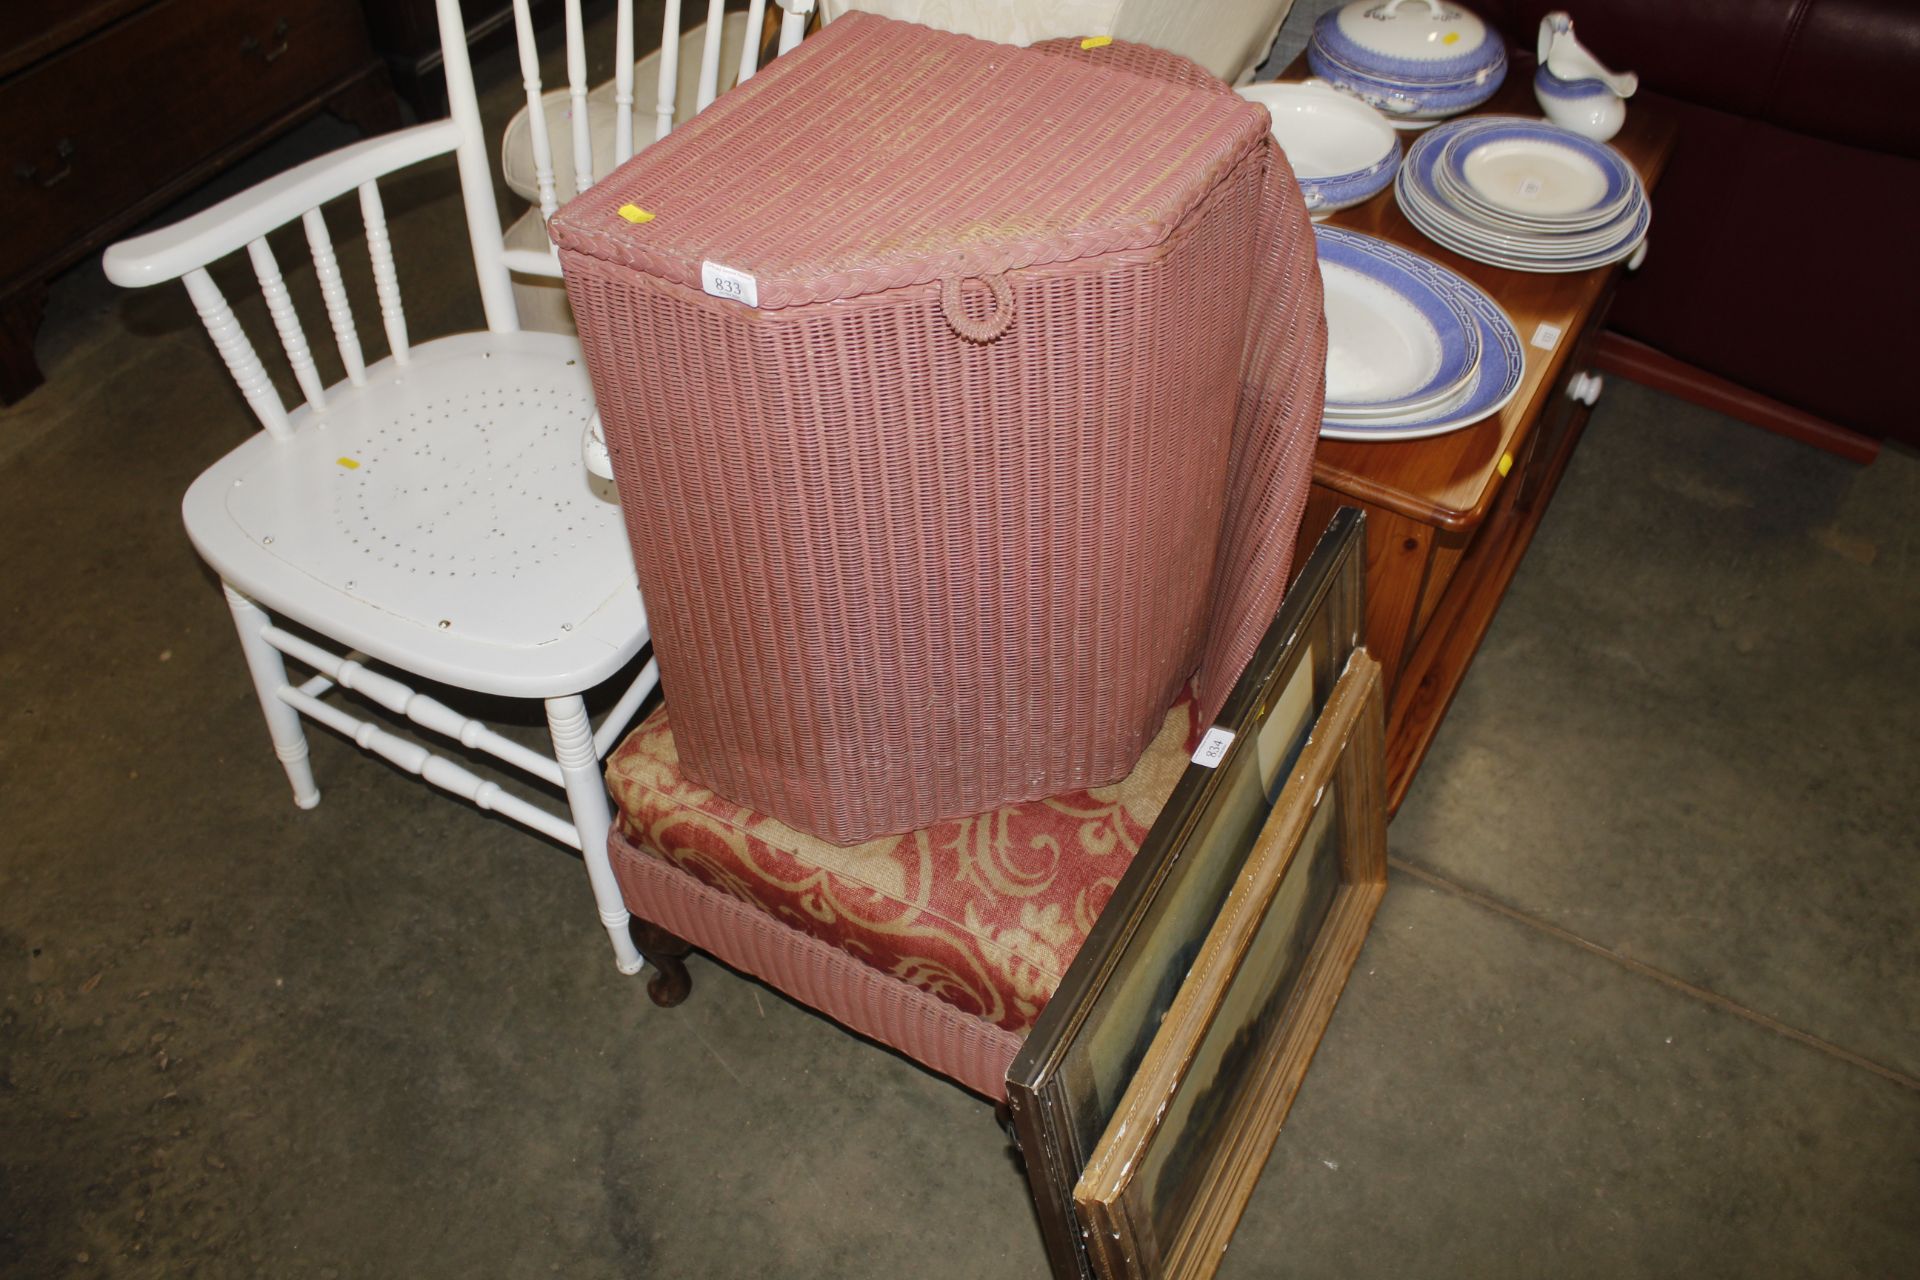 A Lloyd Loom linen basket and chair